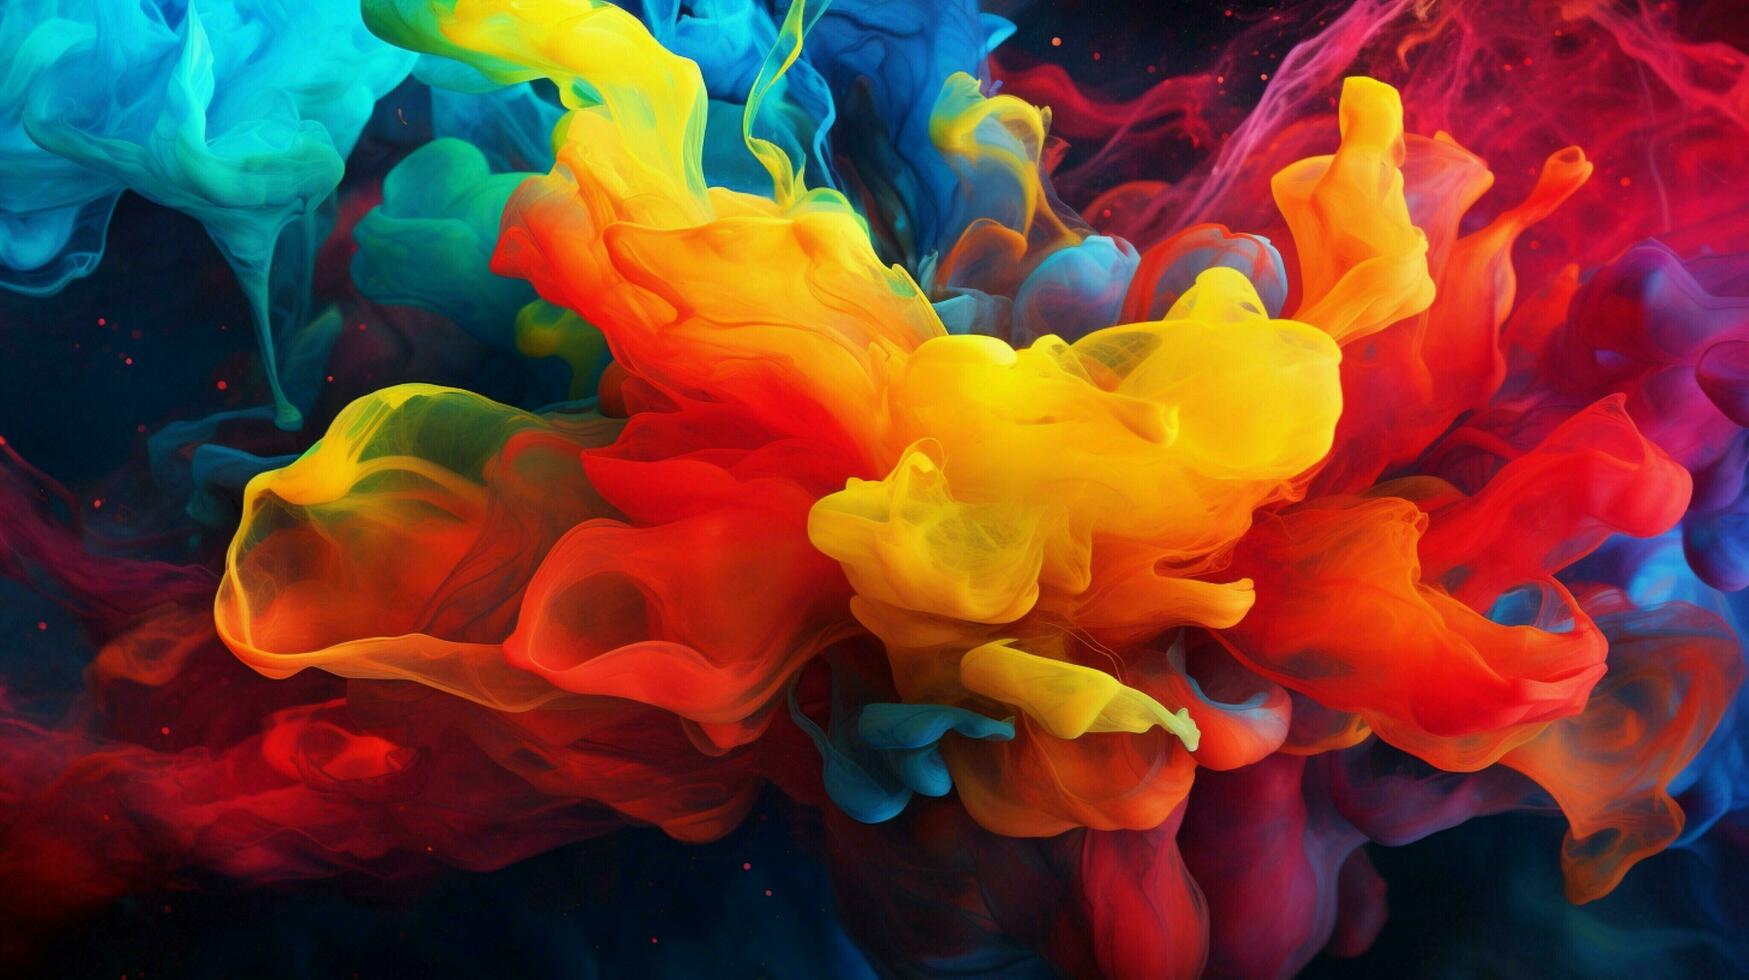 submarino caos vibrante profundo colores suave fluir foto